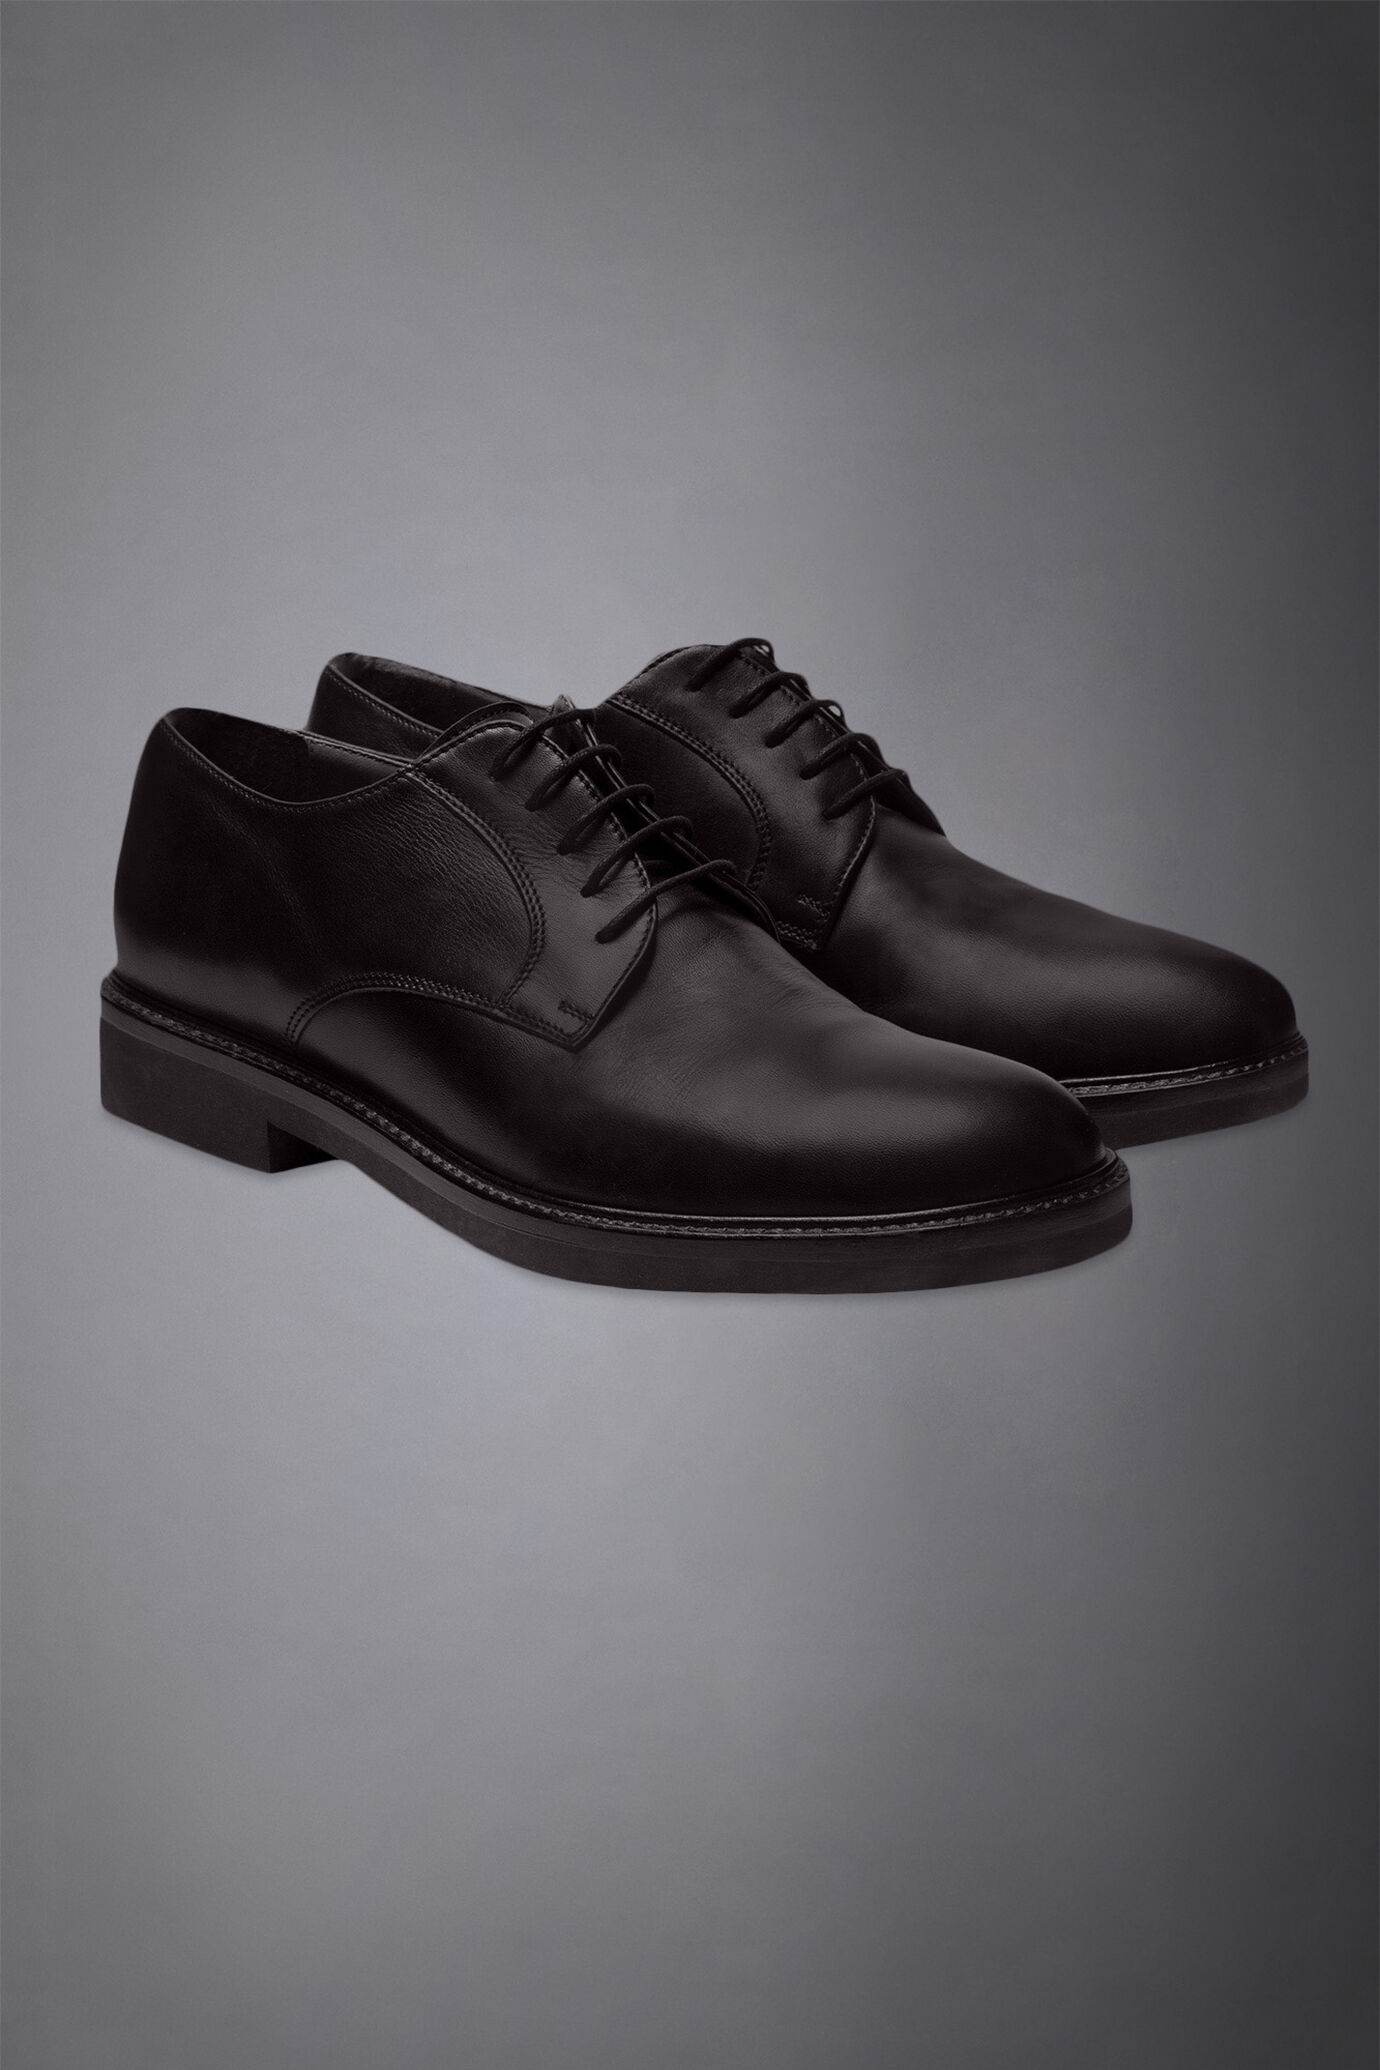 Men's Derby shoes 100% leather